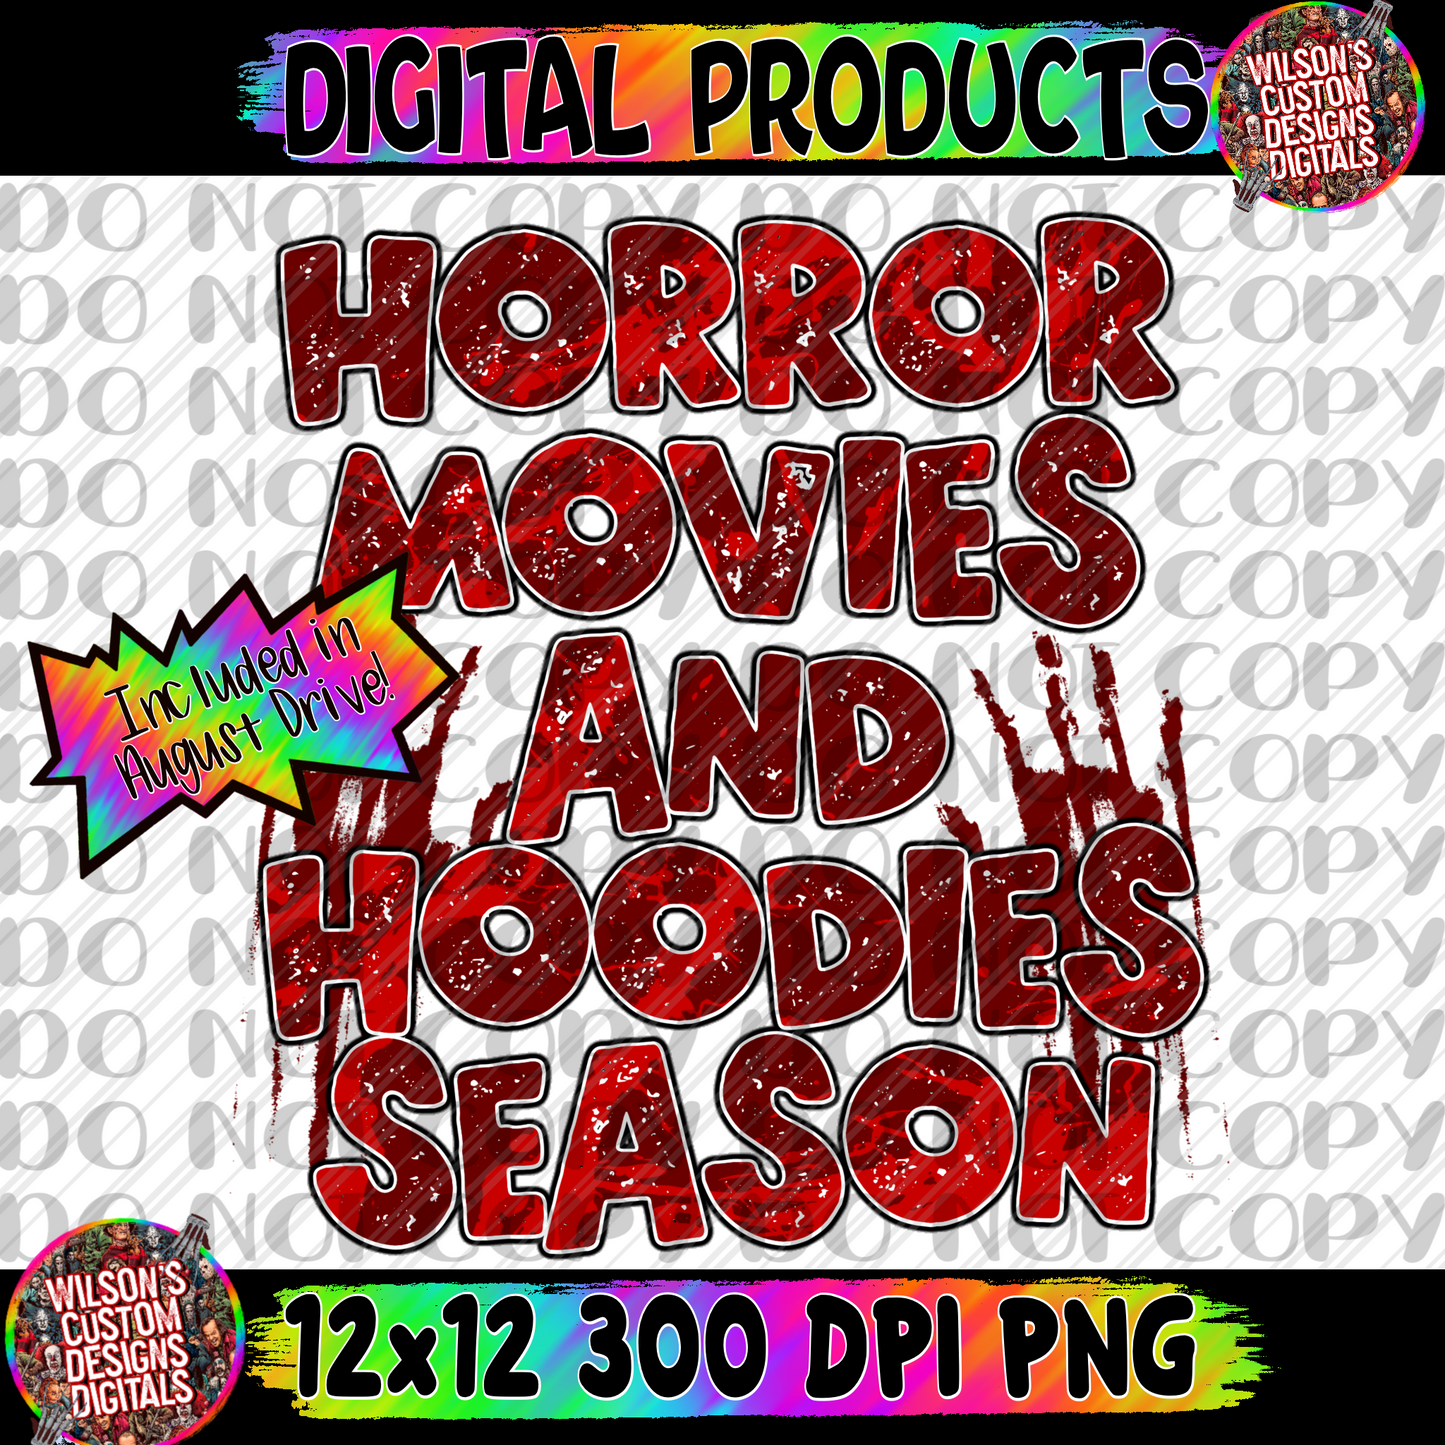 Horror movies and hoodies season